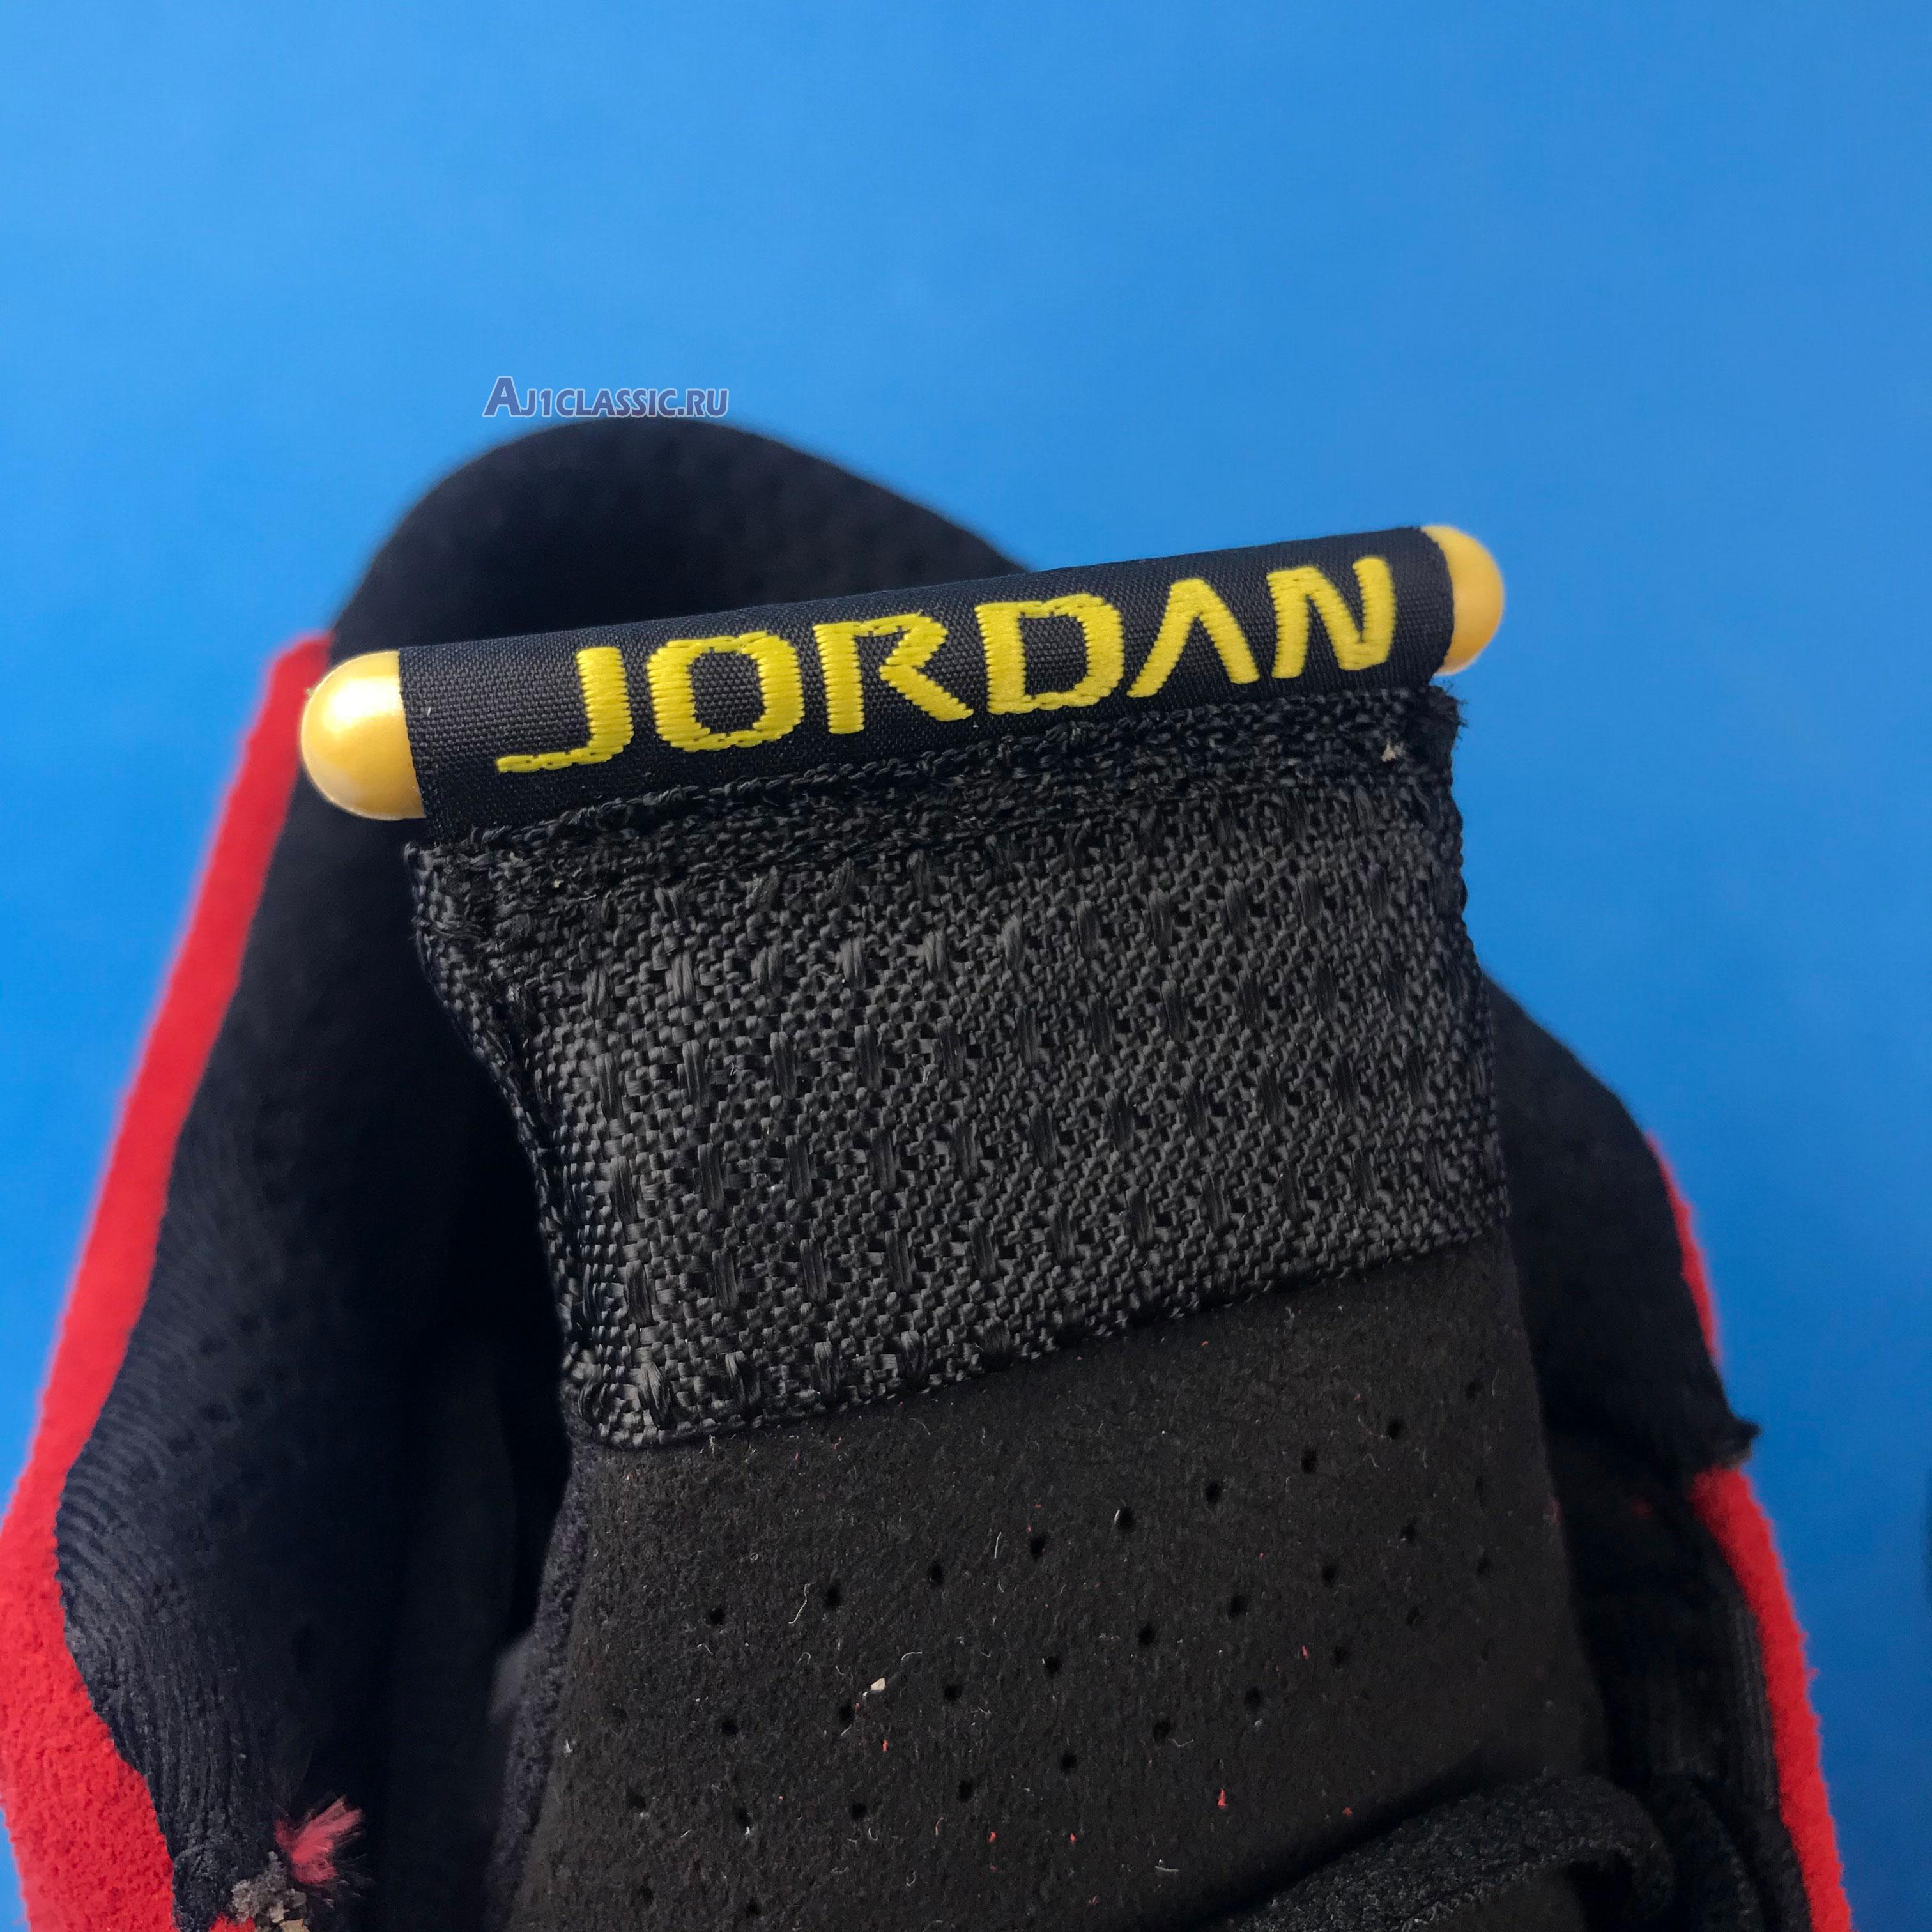 Air Jordan 14 Retro Ferrari 654459-670 Challenge Red/Black/Vibrant Yellow/Anthracite Sneakers